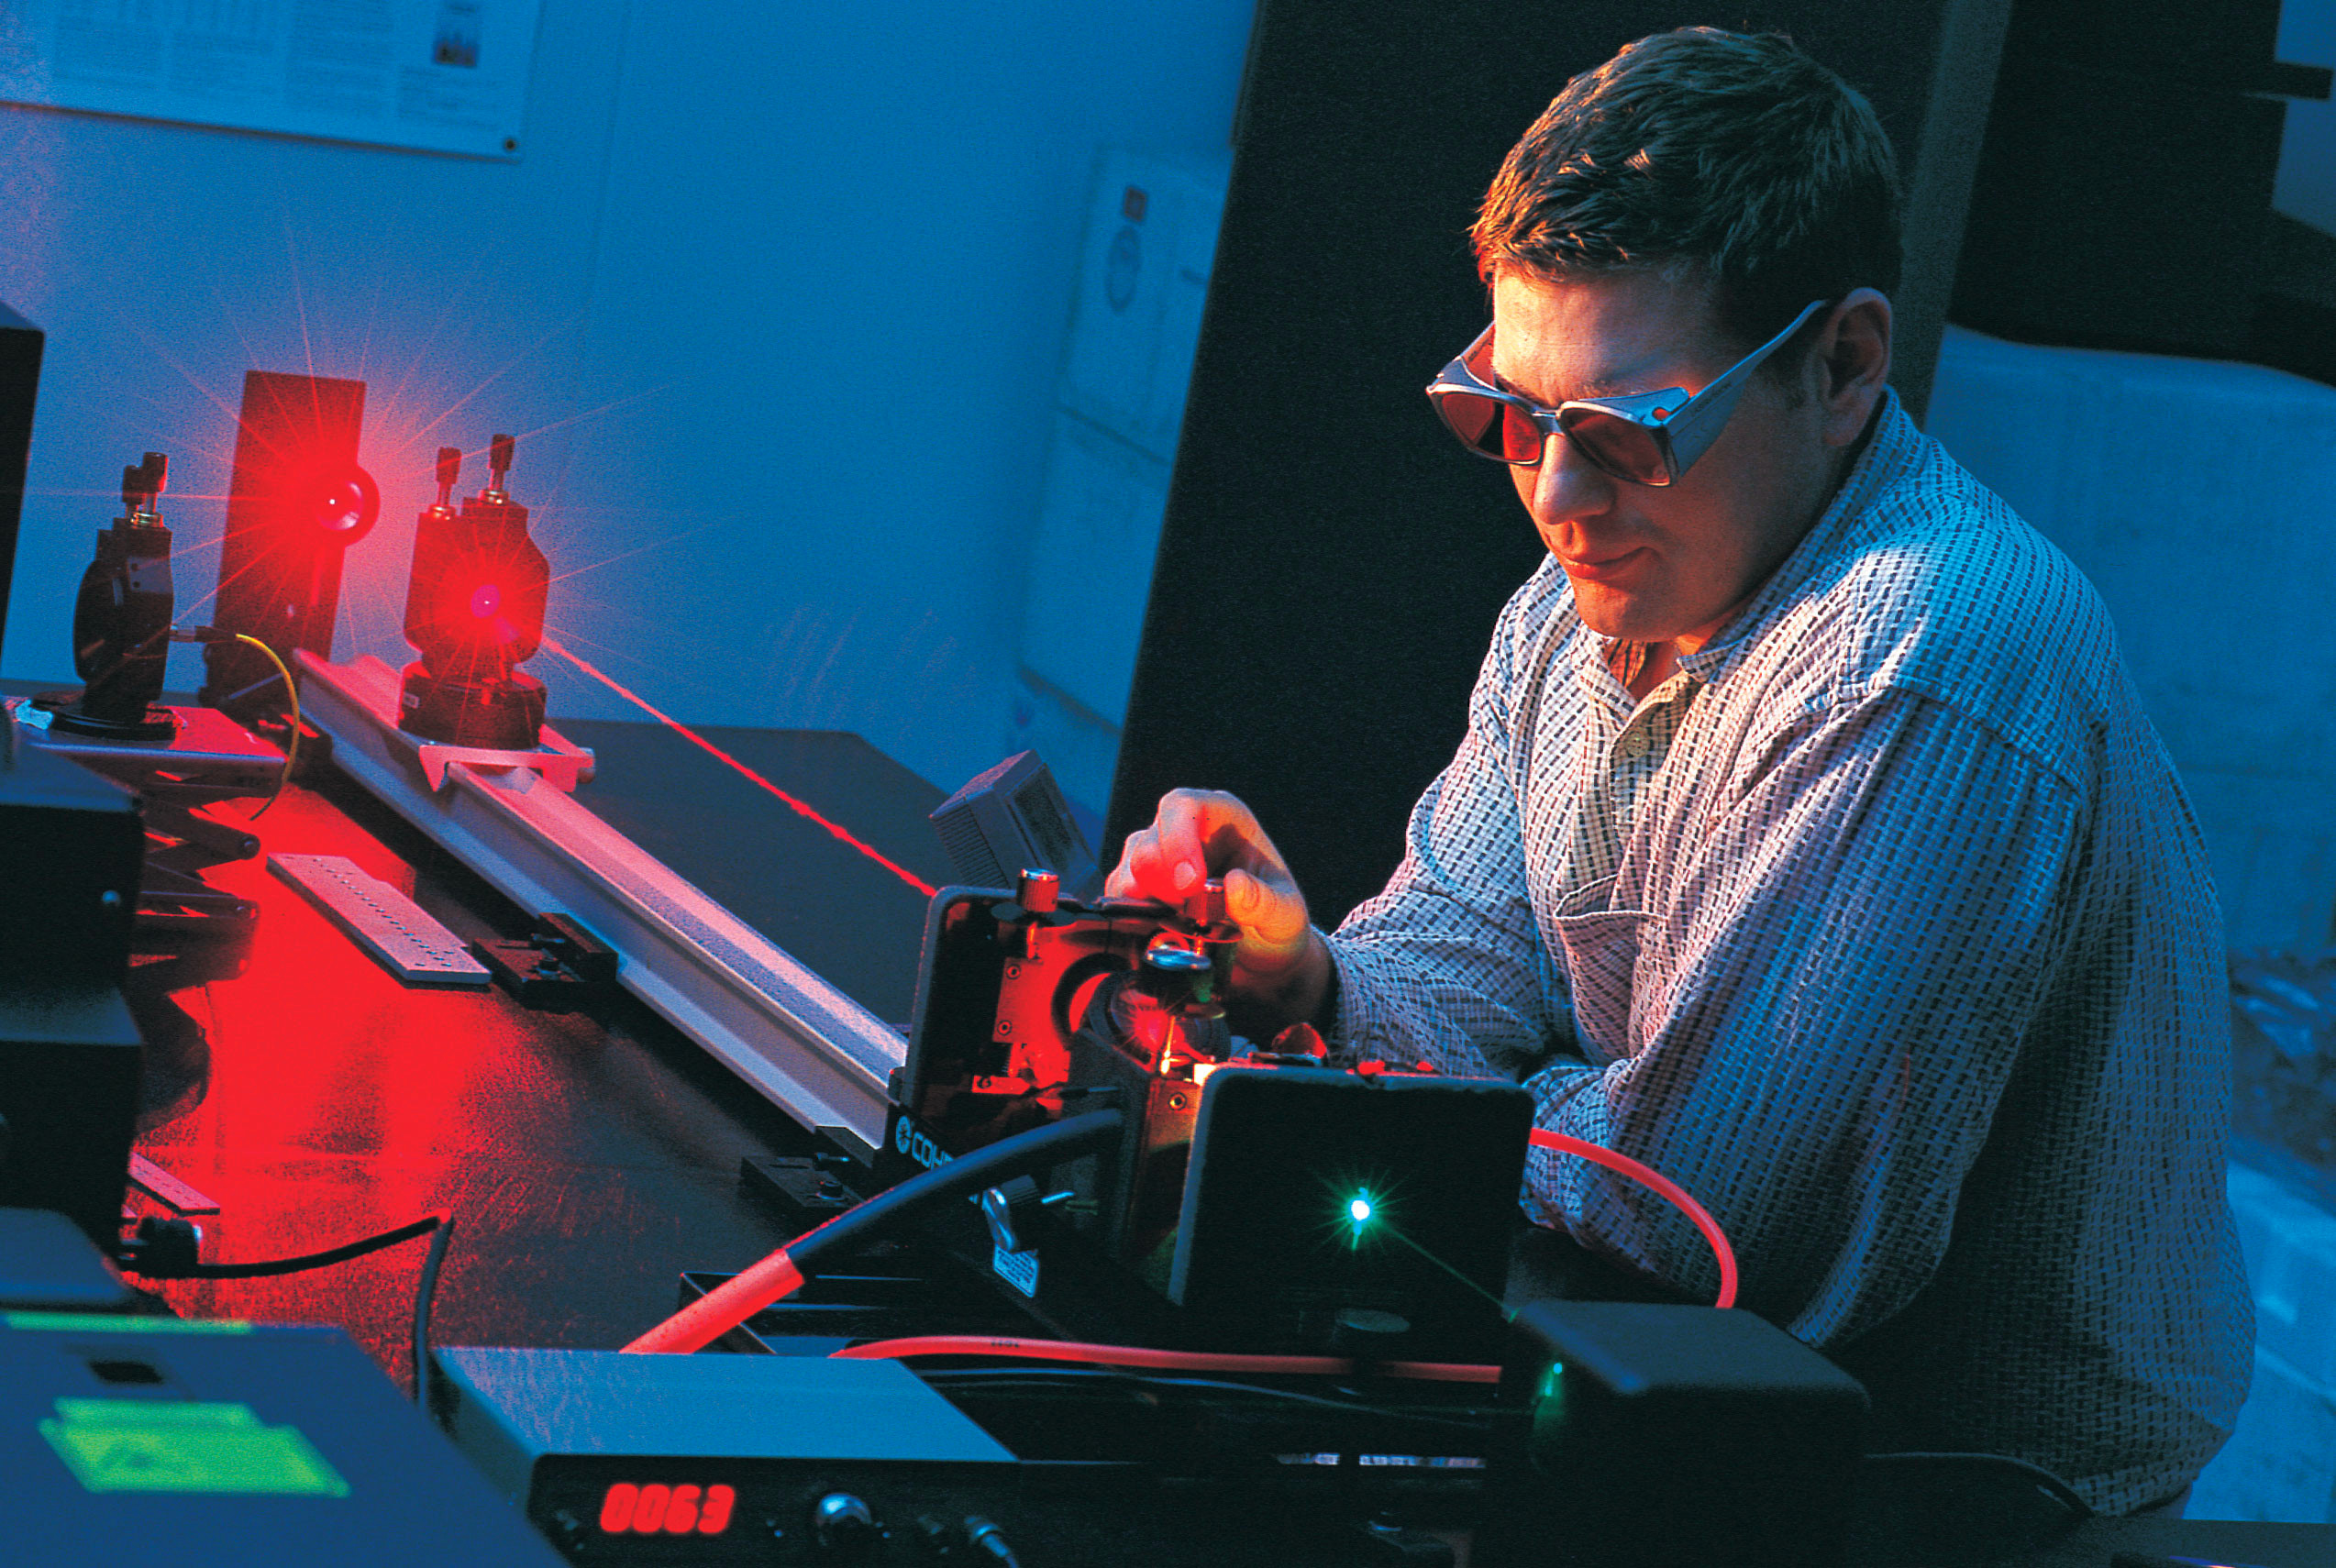 Daryl examining the dye laser, 2003.